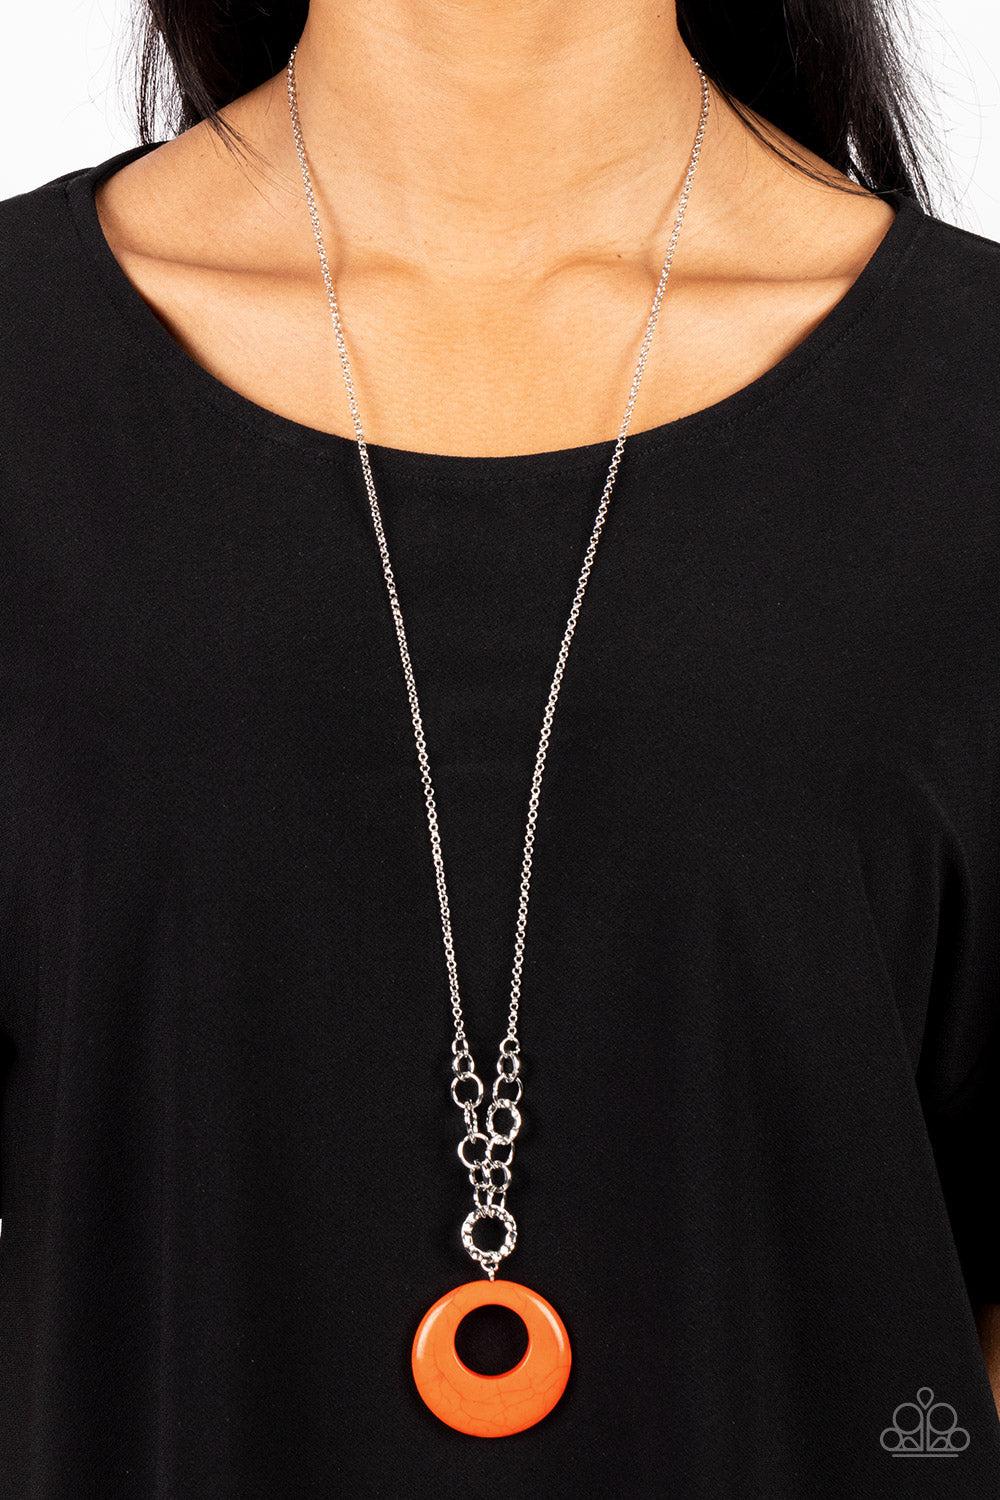 Hidden Dune Orange Stone Necklace - Paparazzi Accessories-on model - CarasShop.com - $5 Jewelry by Cara Jewels